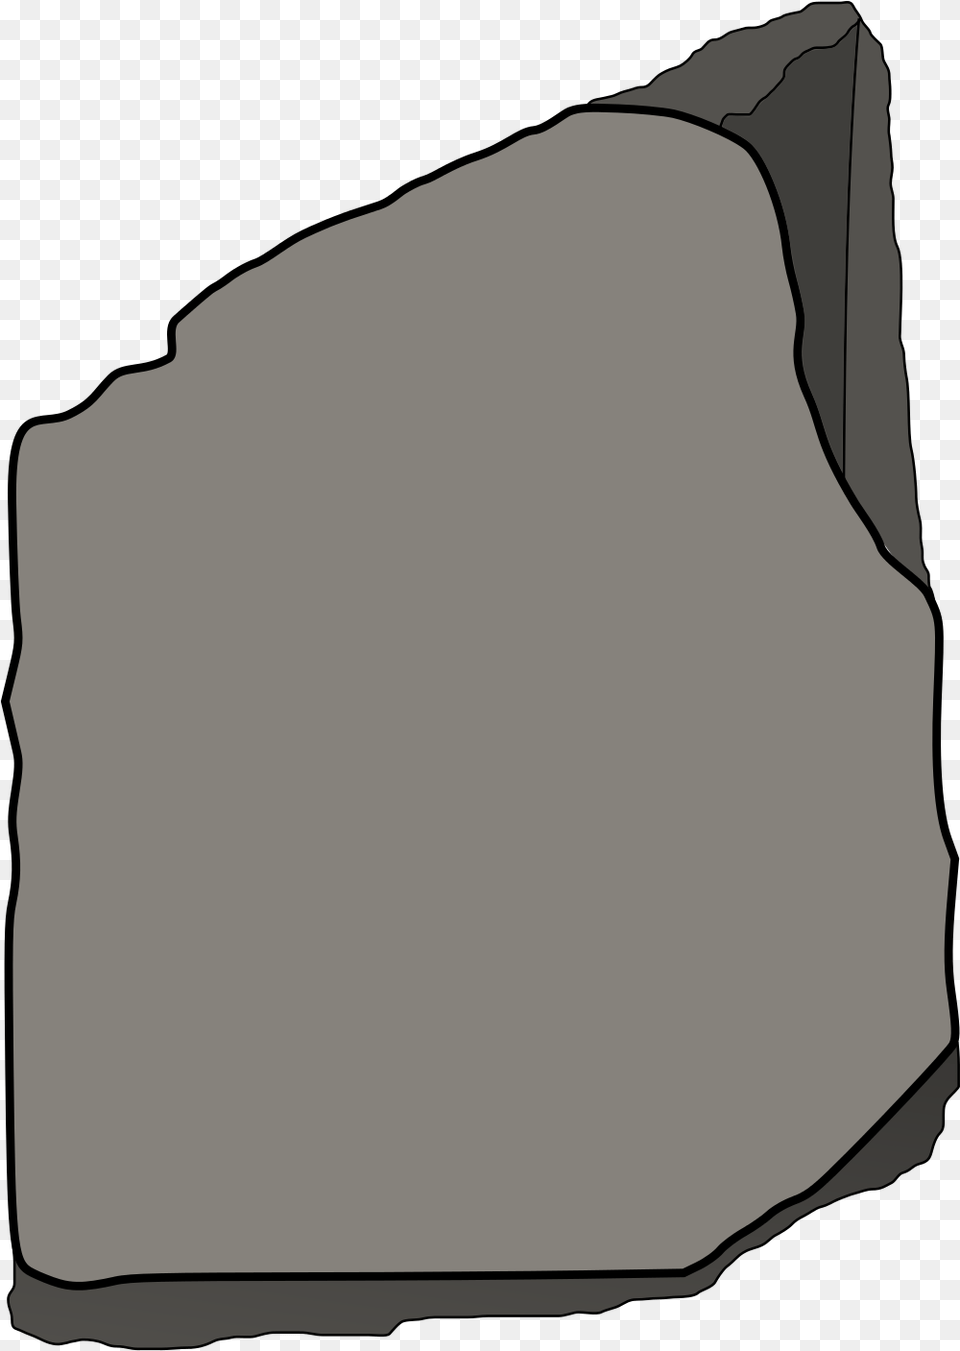 Open De Rosetta Stone, Rock, Bag, Anthracite, Coal Free Png